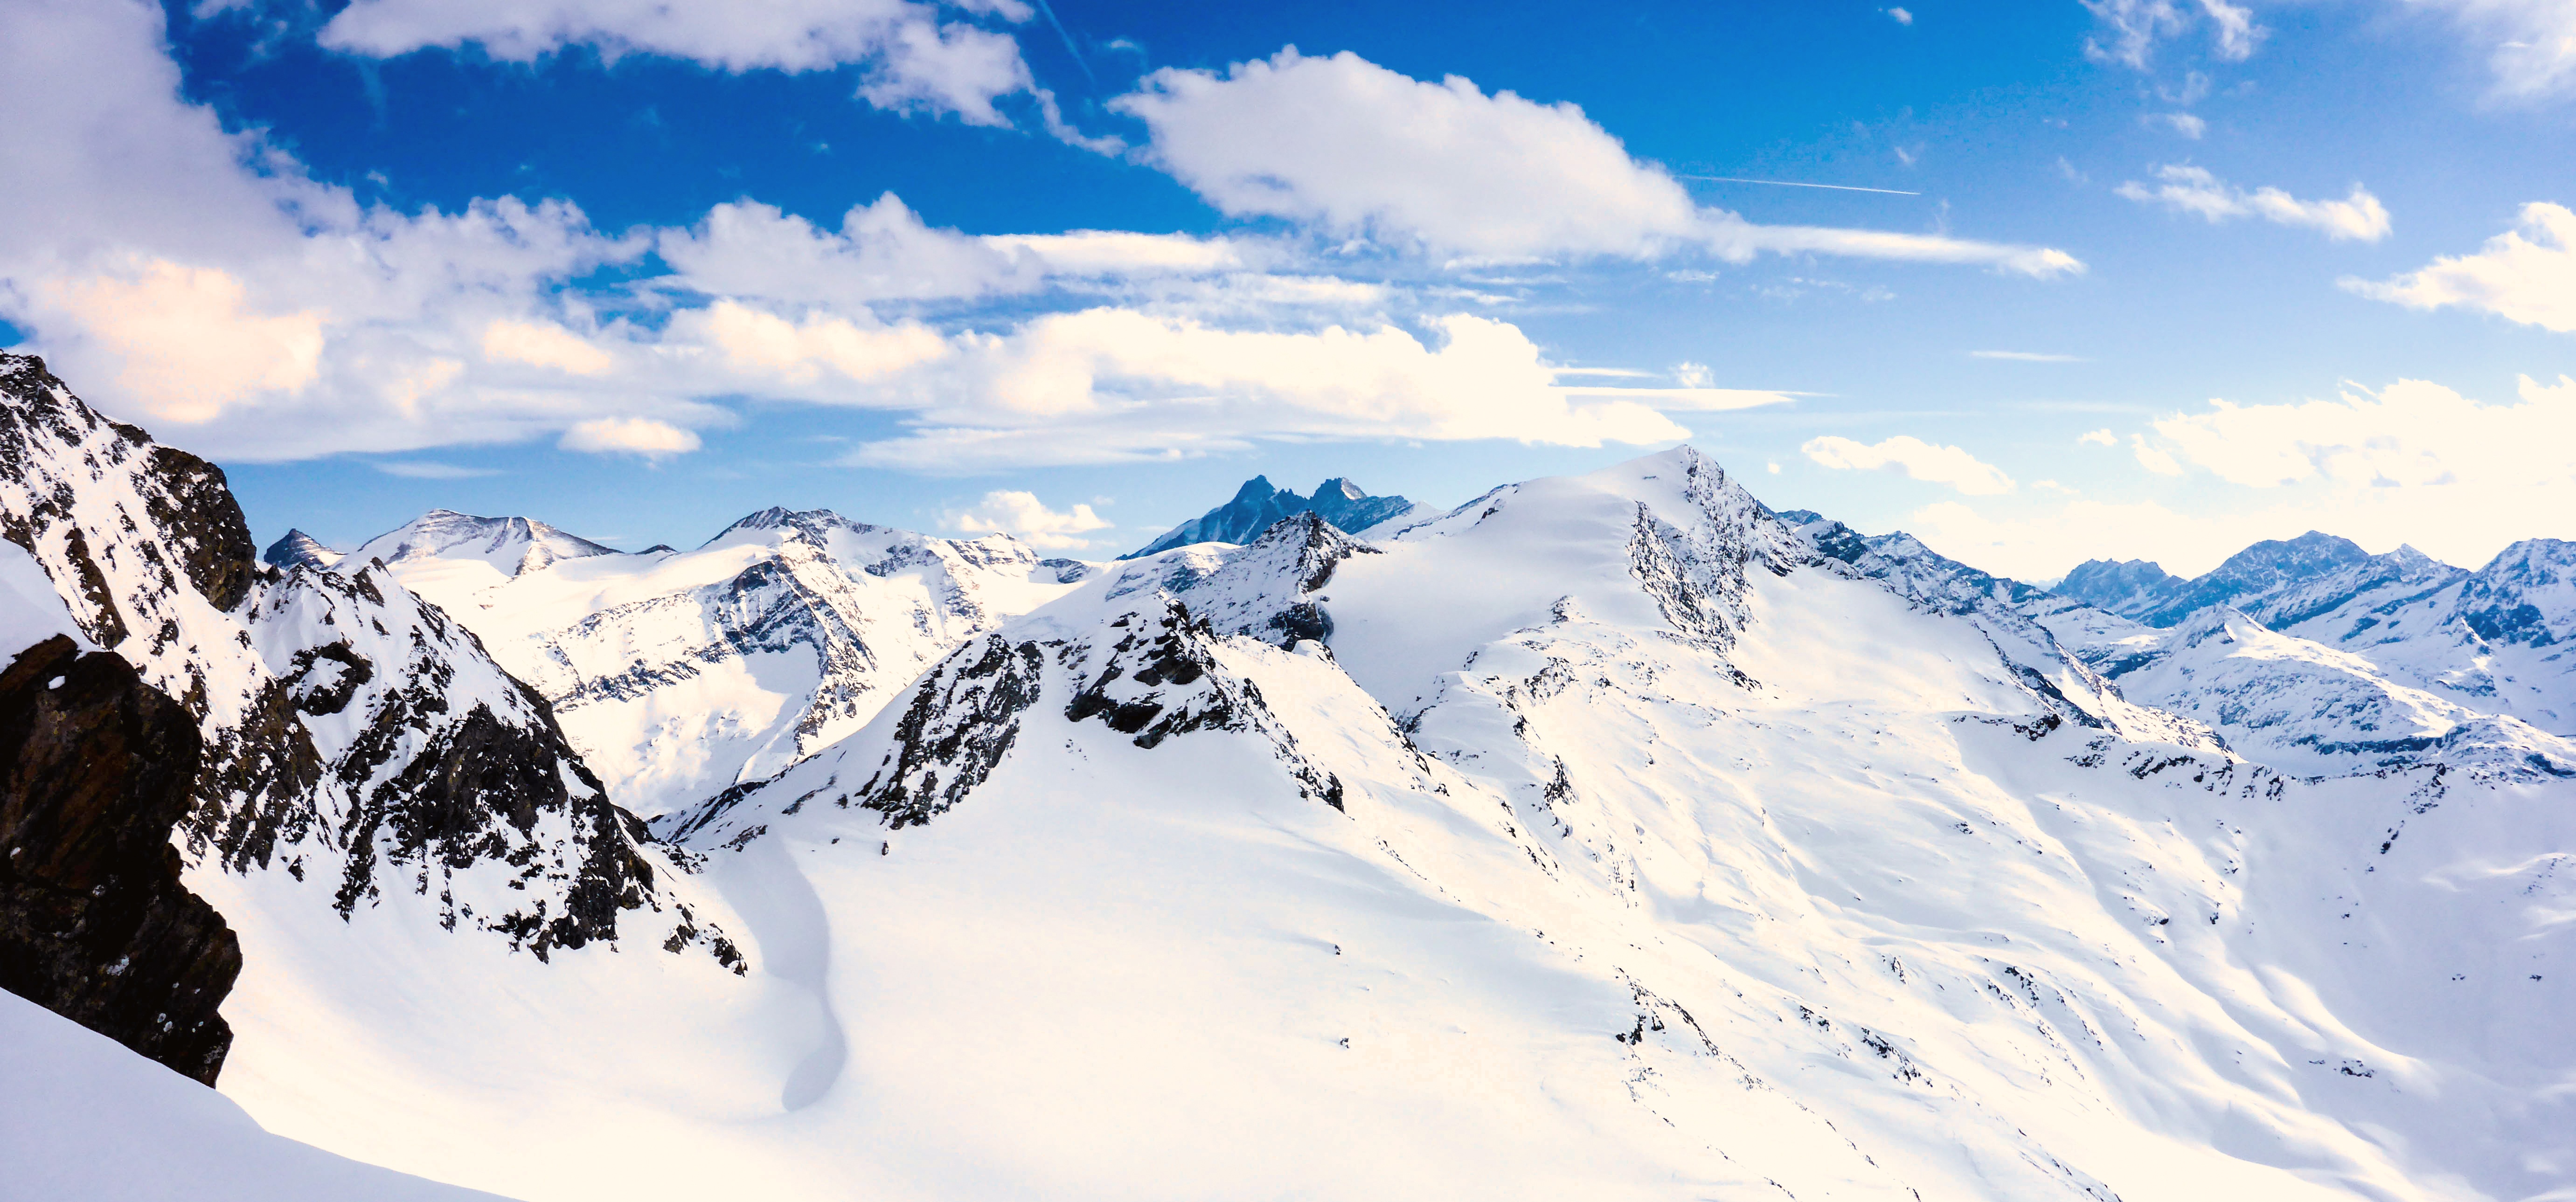 File:Snowy mountain range.jpg - Wikimedia Commons